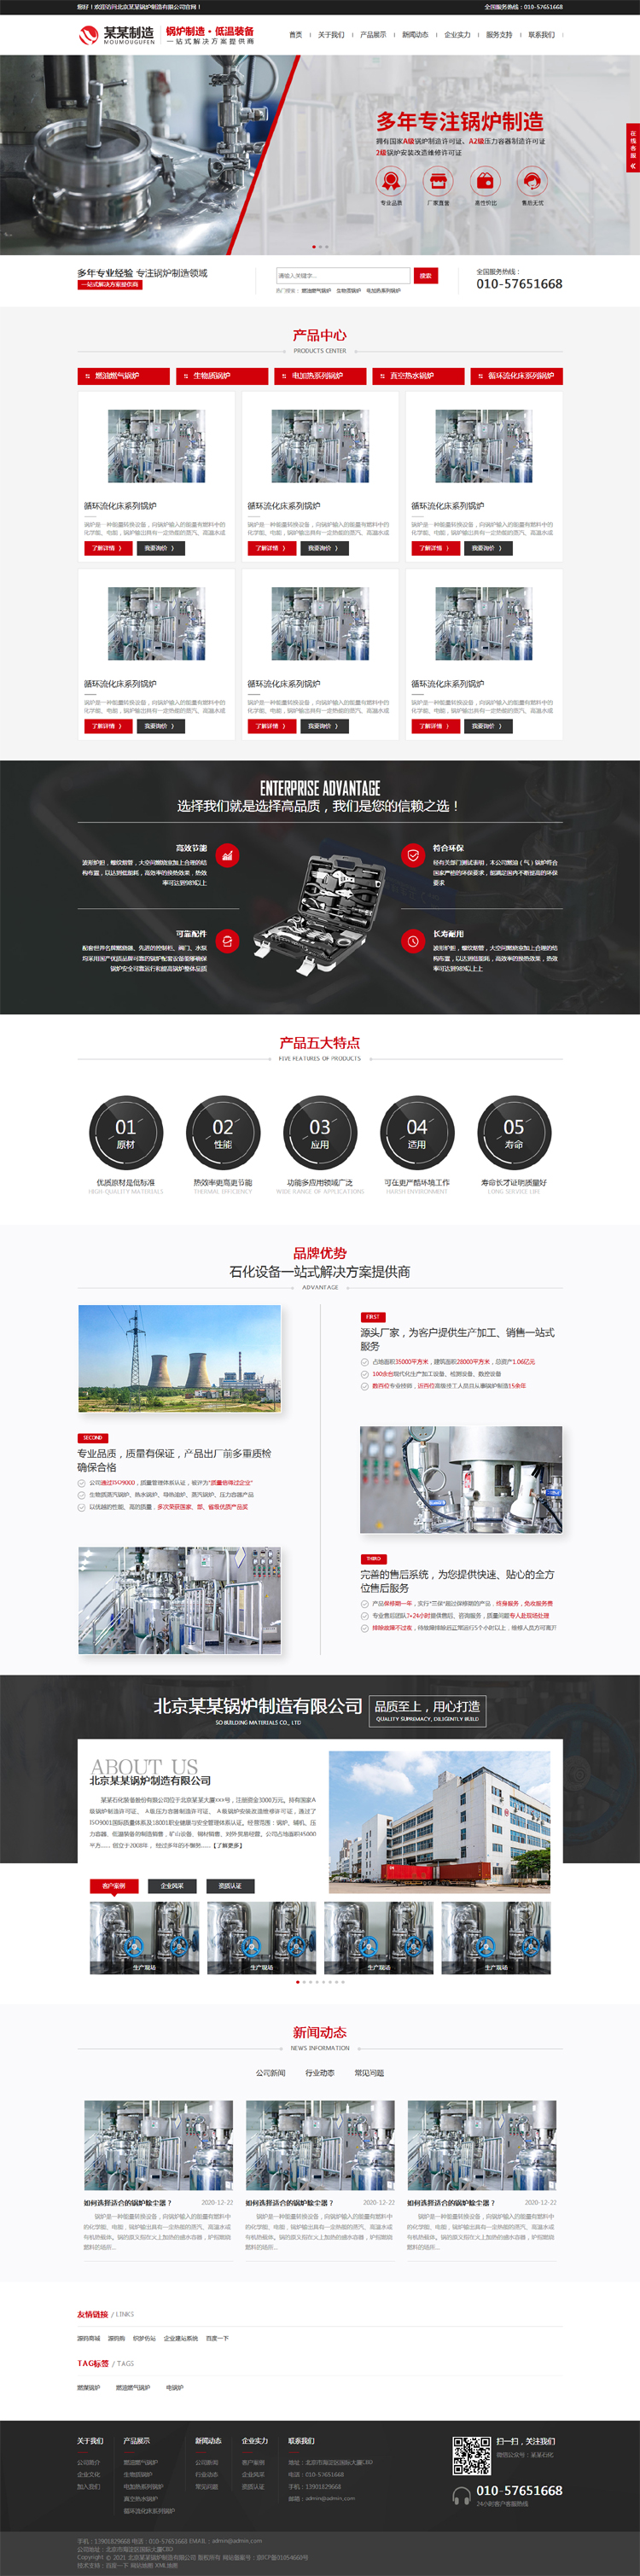 M1027 响应式锅炉制造石化装备类网站pbootcms模板 压力容器网站源码下载